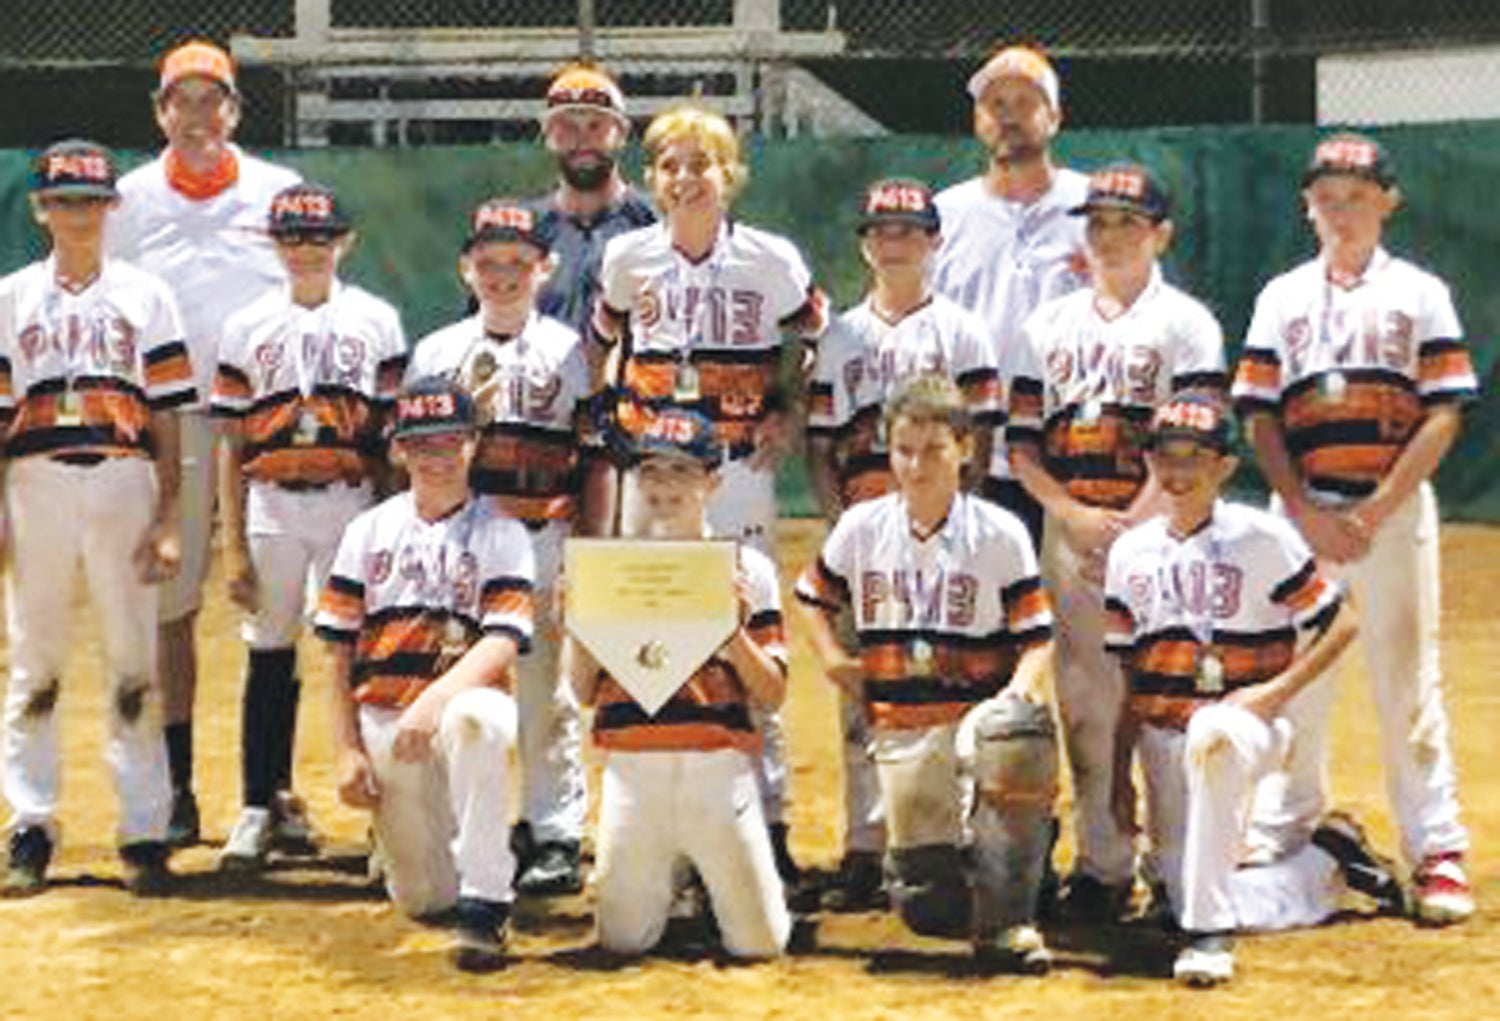 13-U baseball team wins tourney - Davie County Enterprise ...